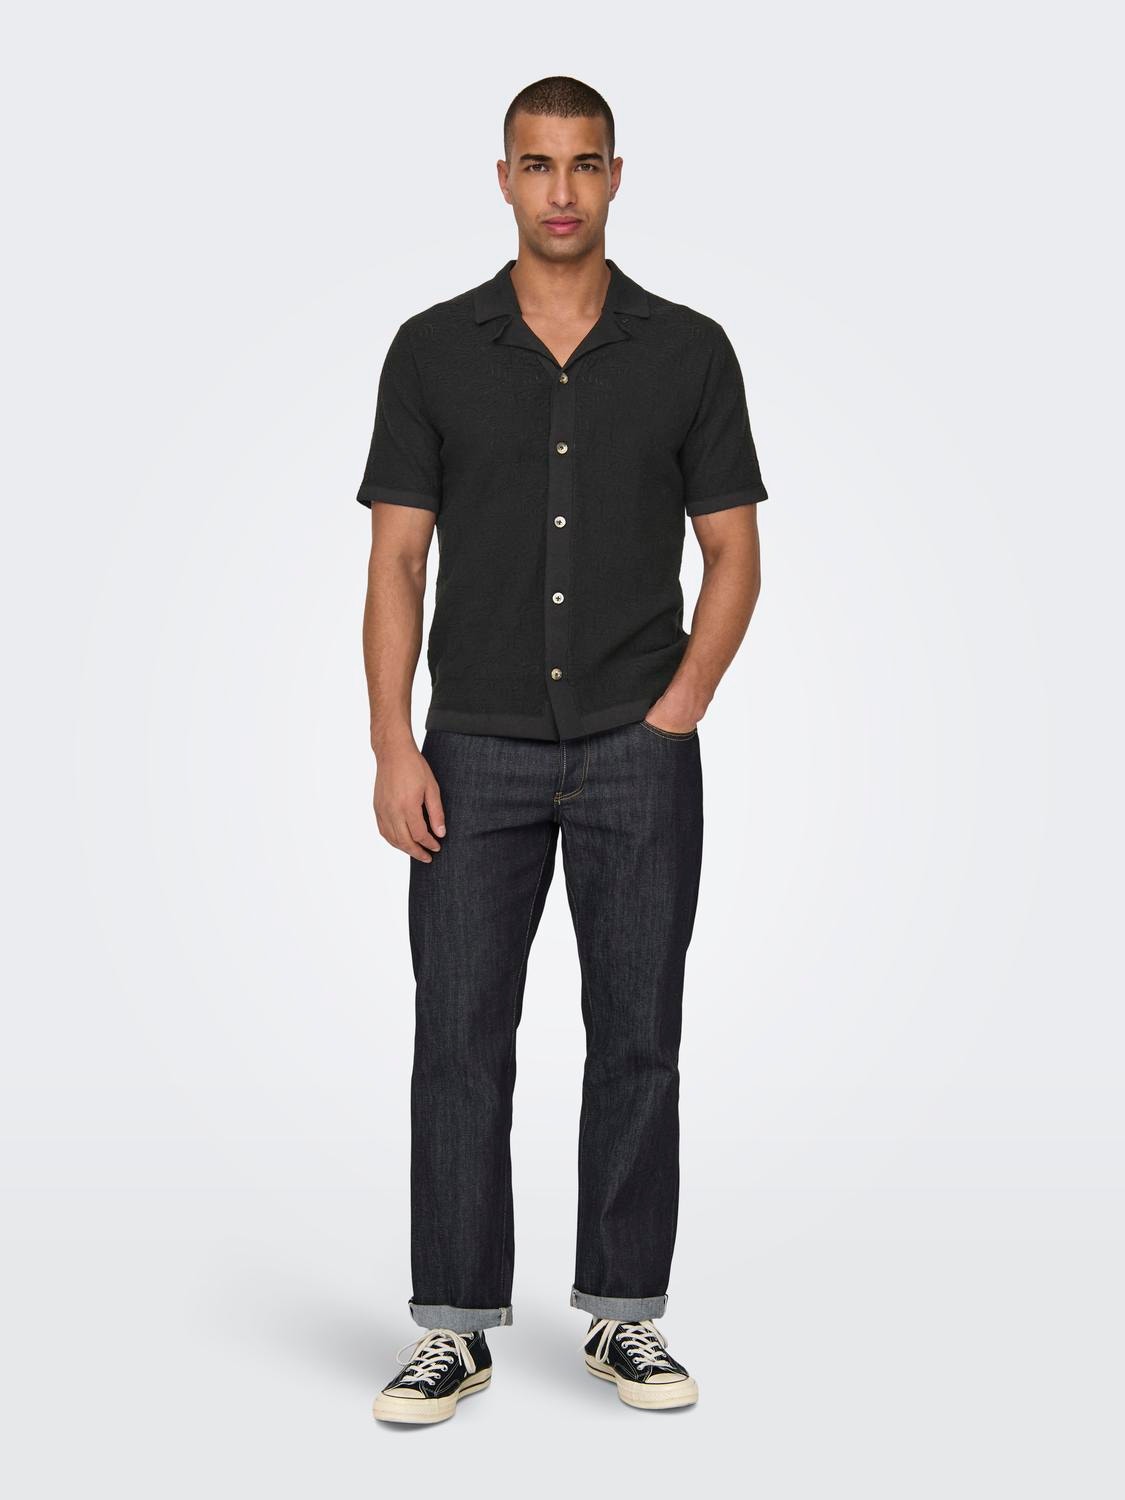 ONLY & SONS Short sleeved shirt -Black - 22028578